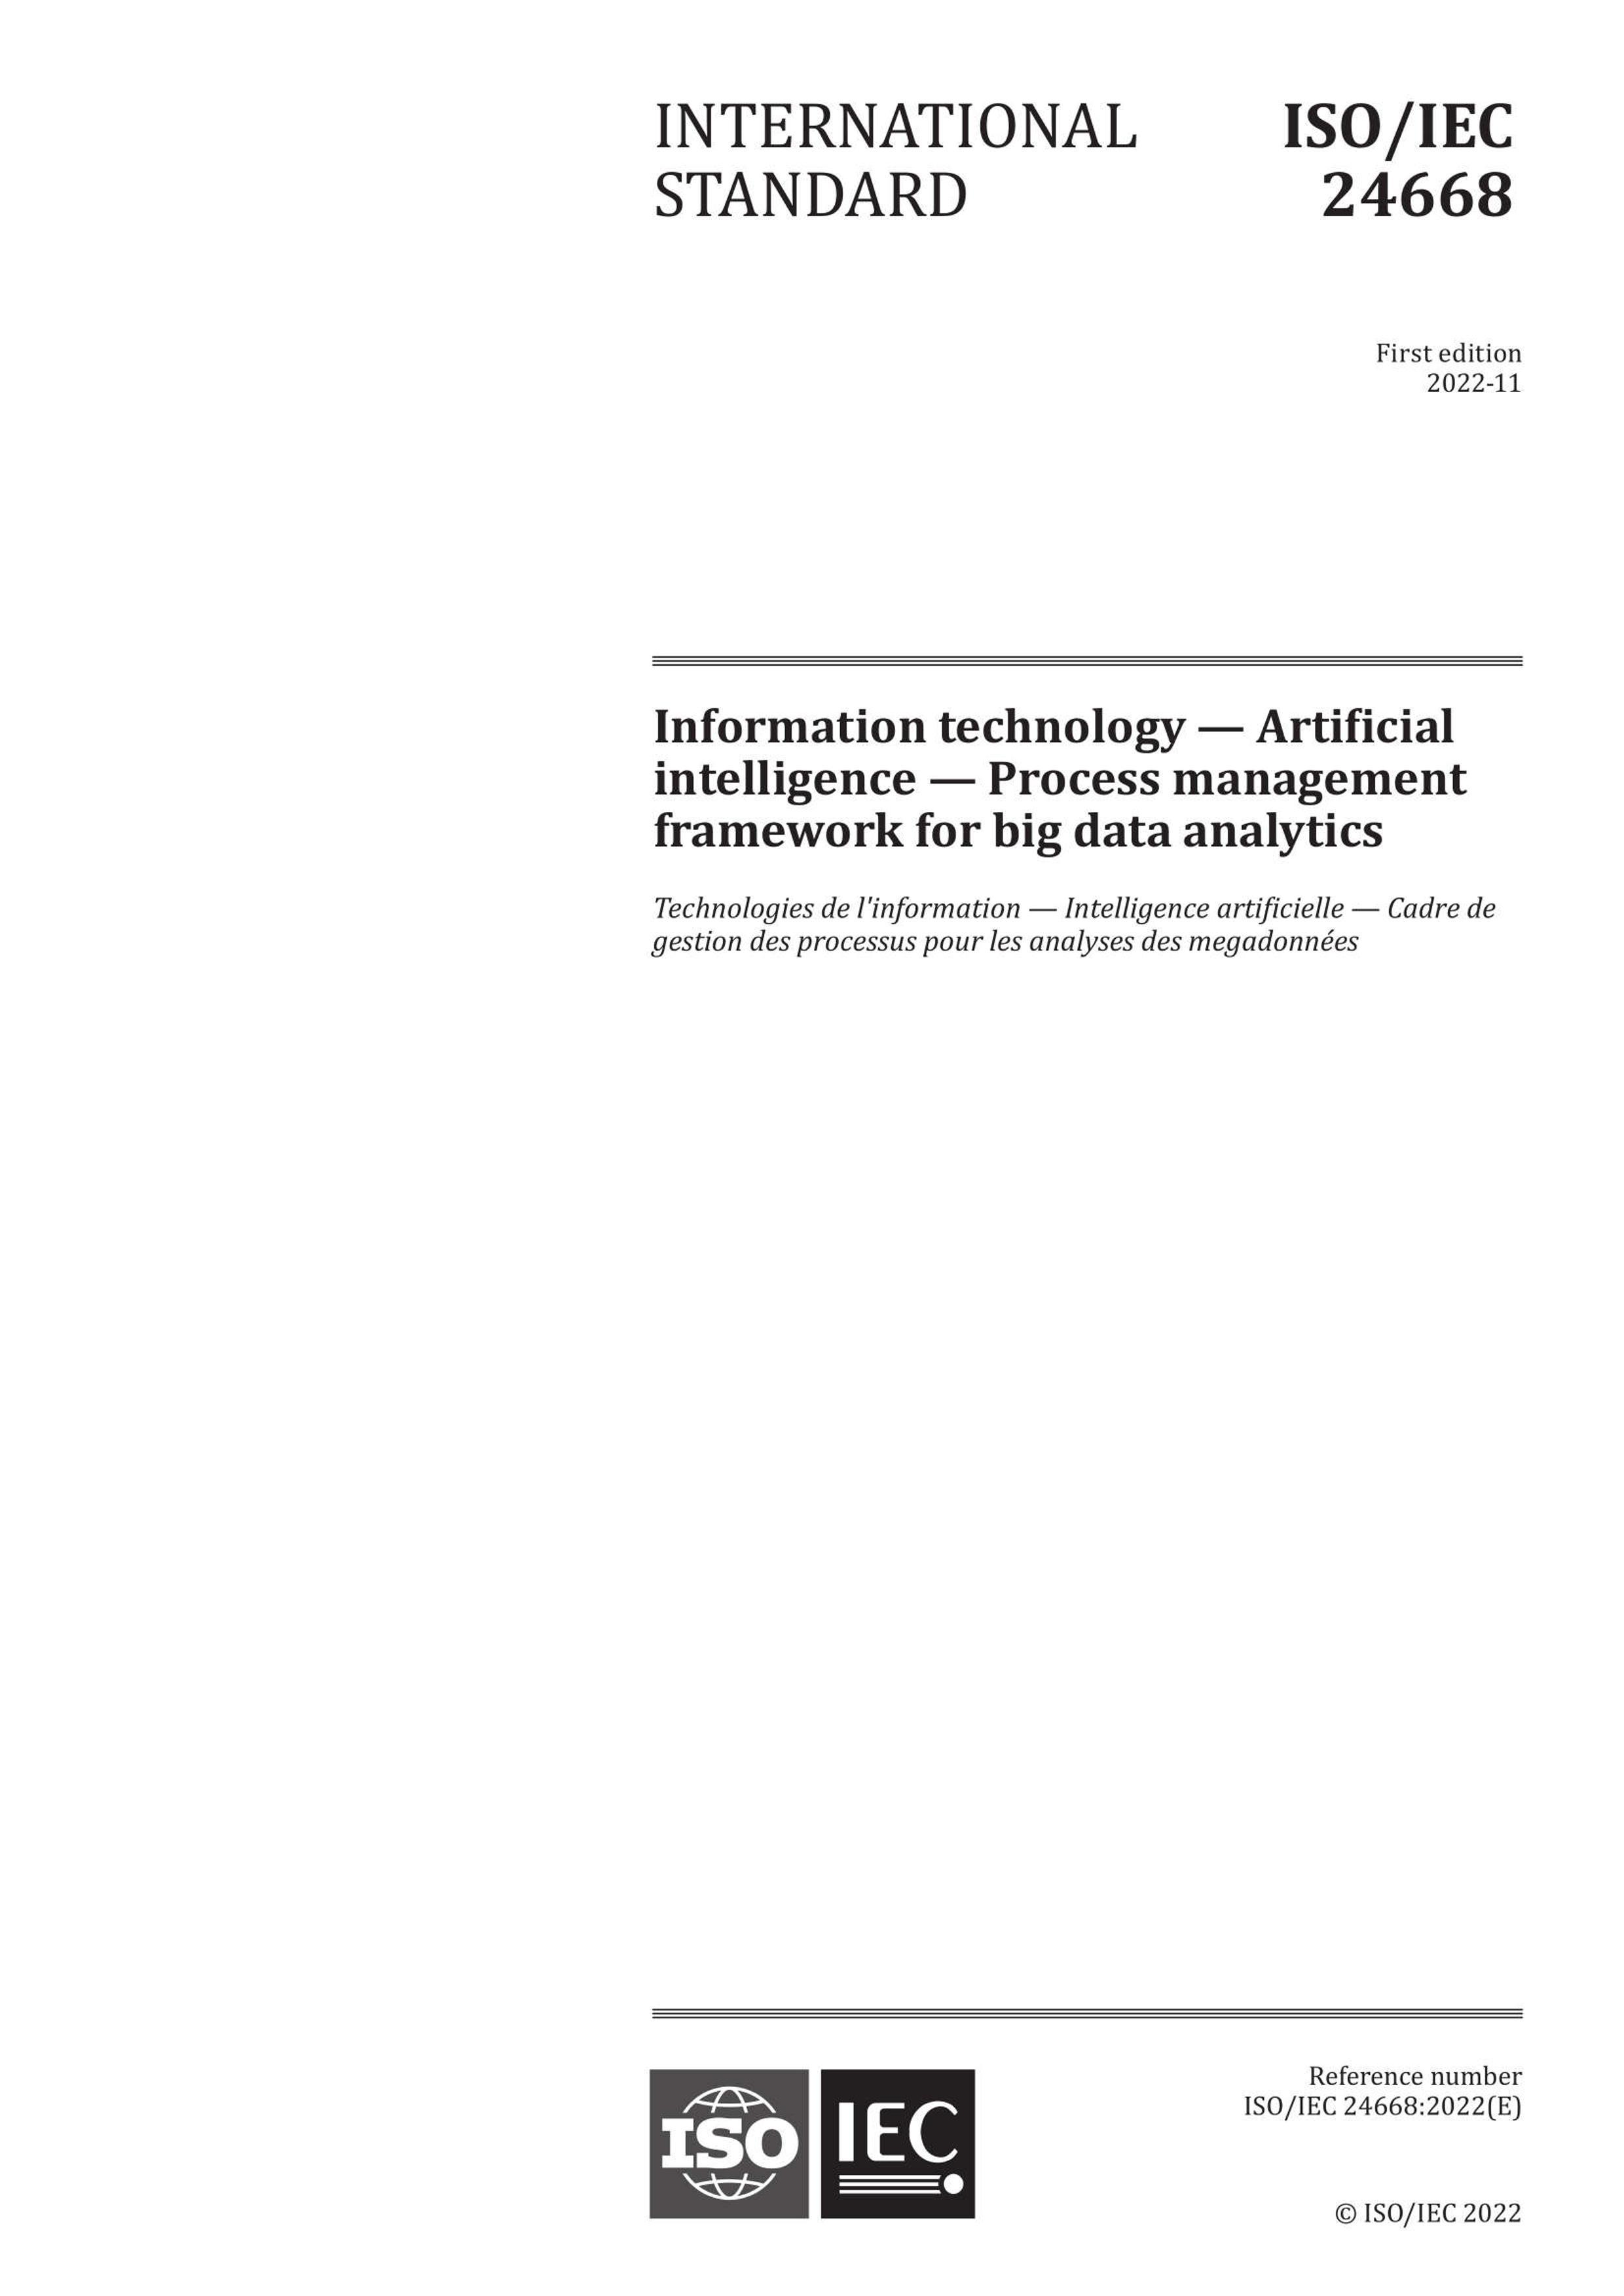 ISOMIEC 24668-2022 Information technology  Artificial intelligence  Process management framework for big data analytics.pdf1ҳ